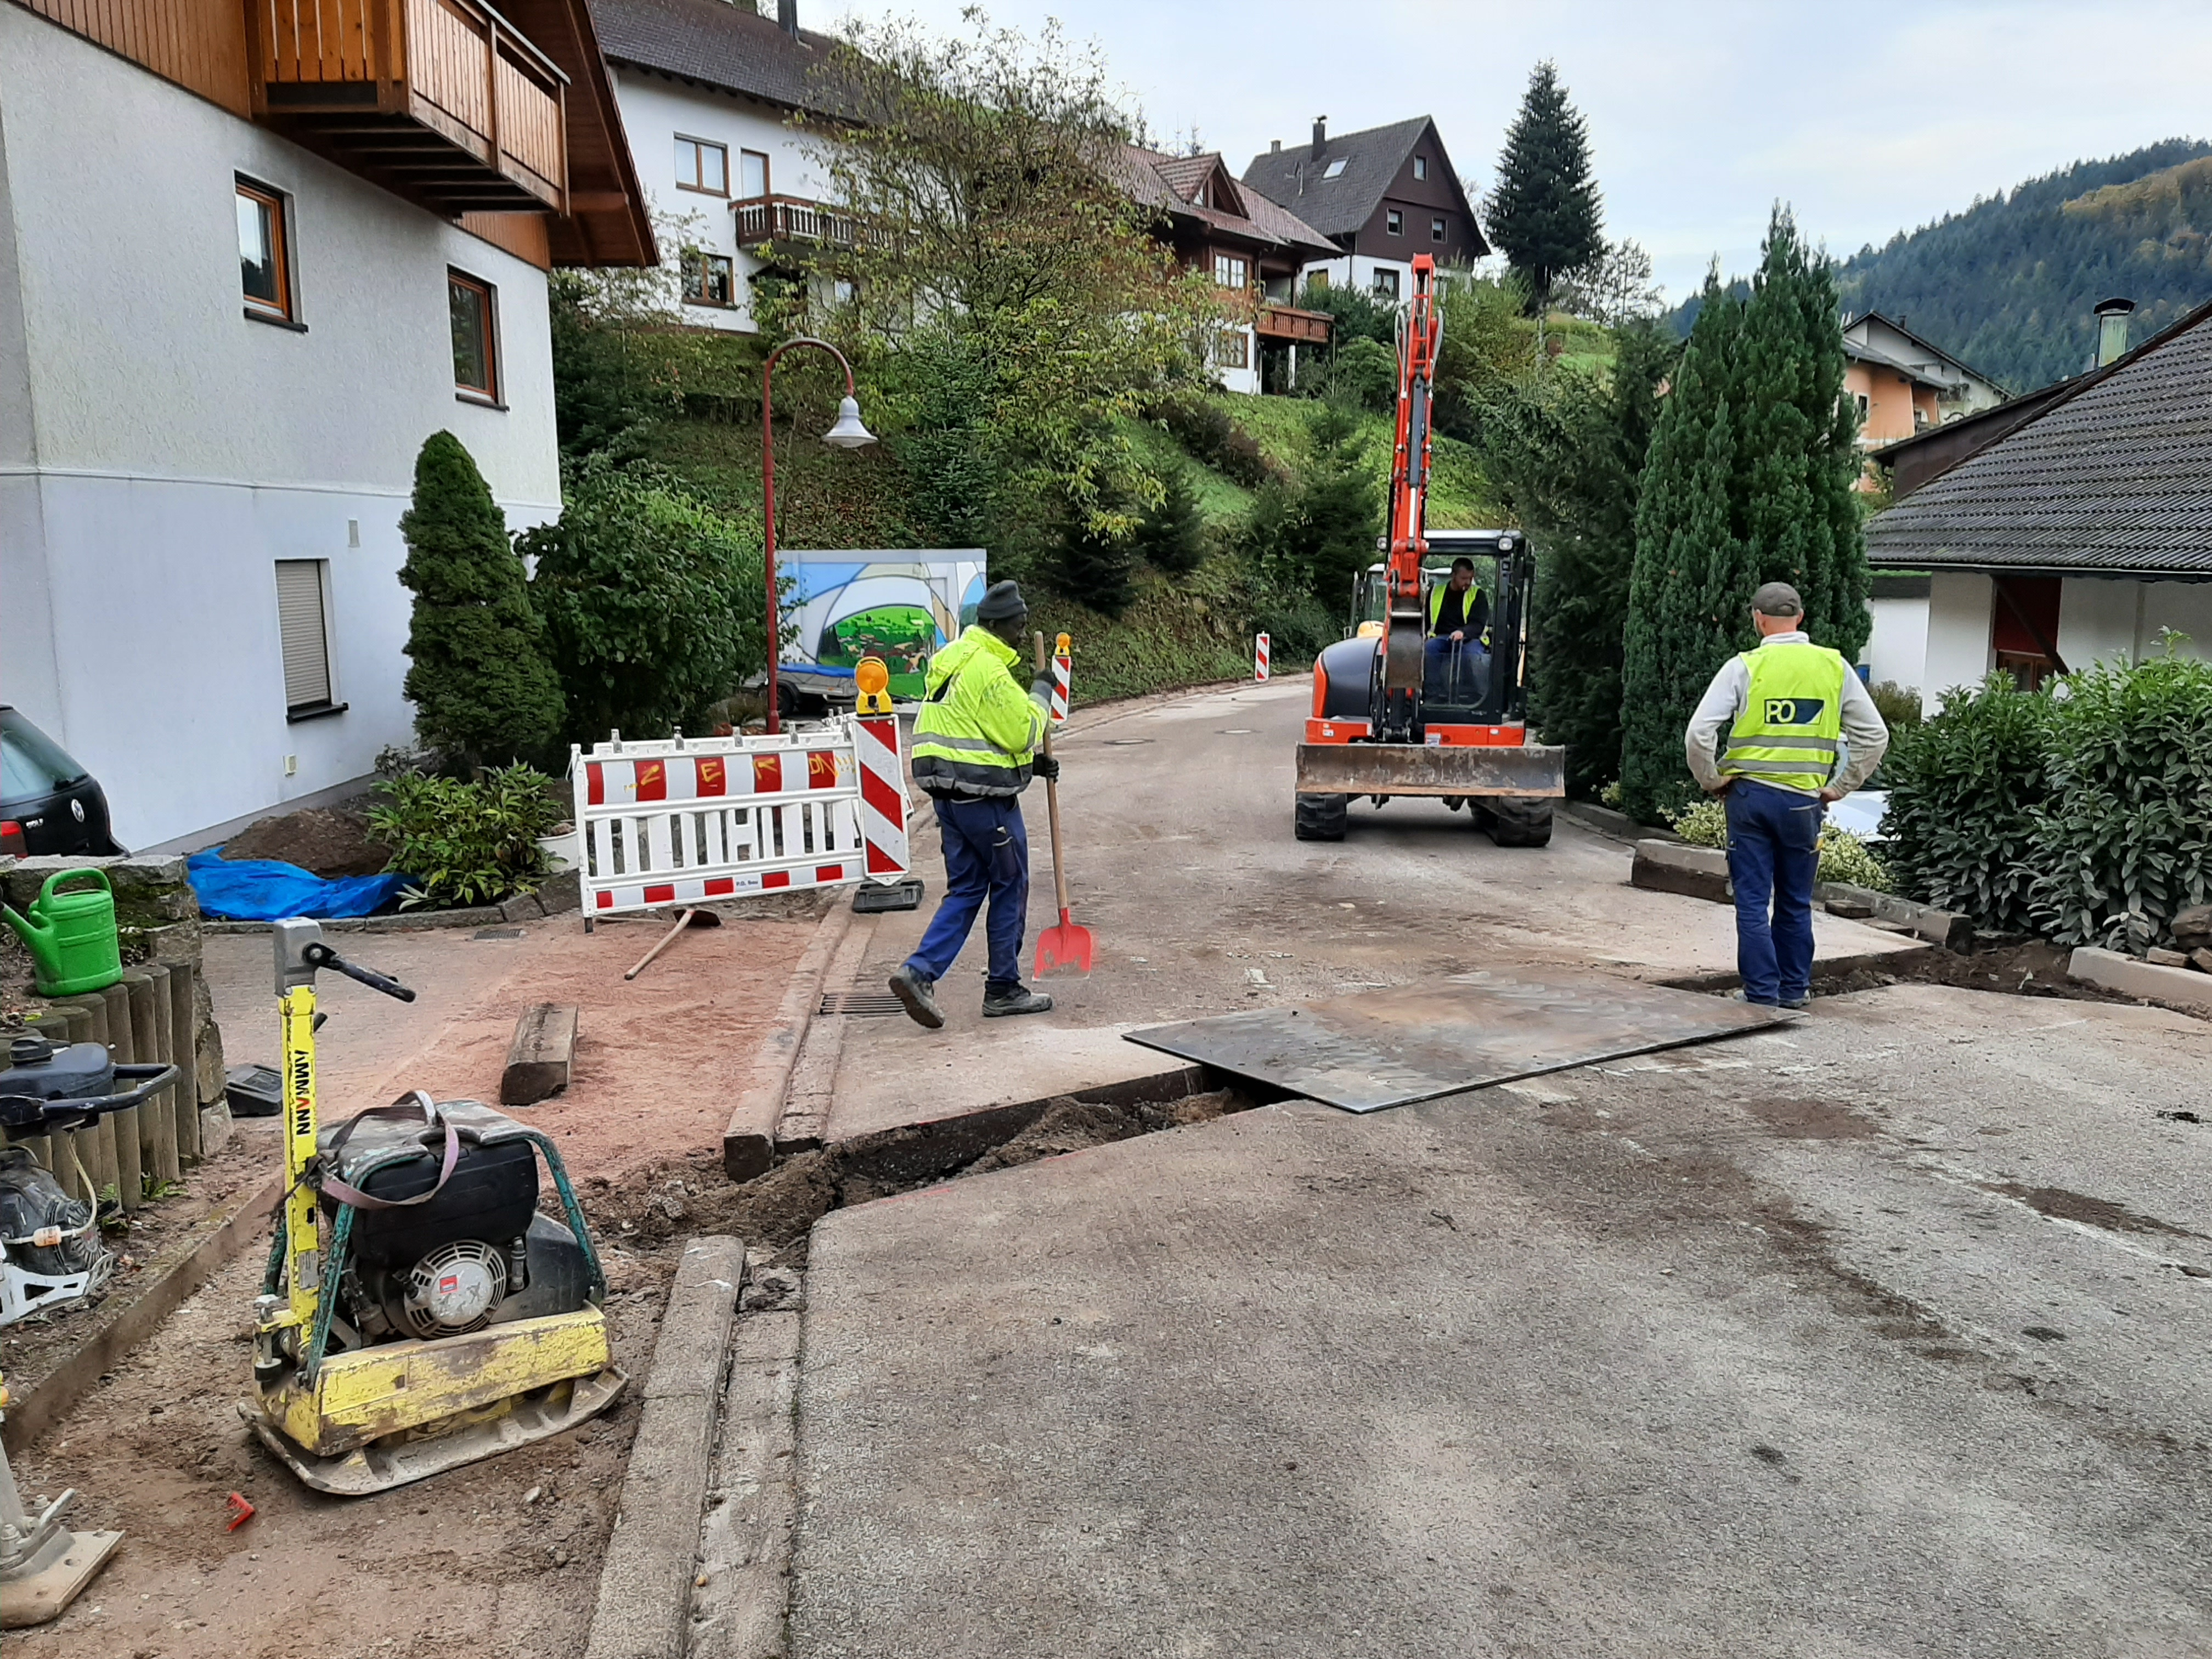                                                     Bauarbeiten im Bauabschnitt 2 am Kirchberg                                    